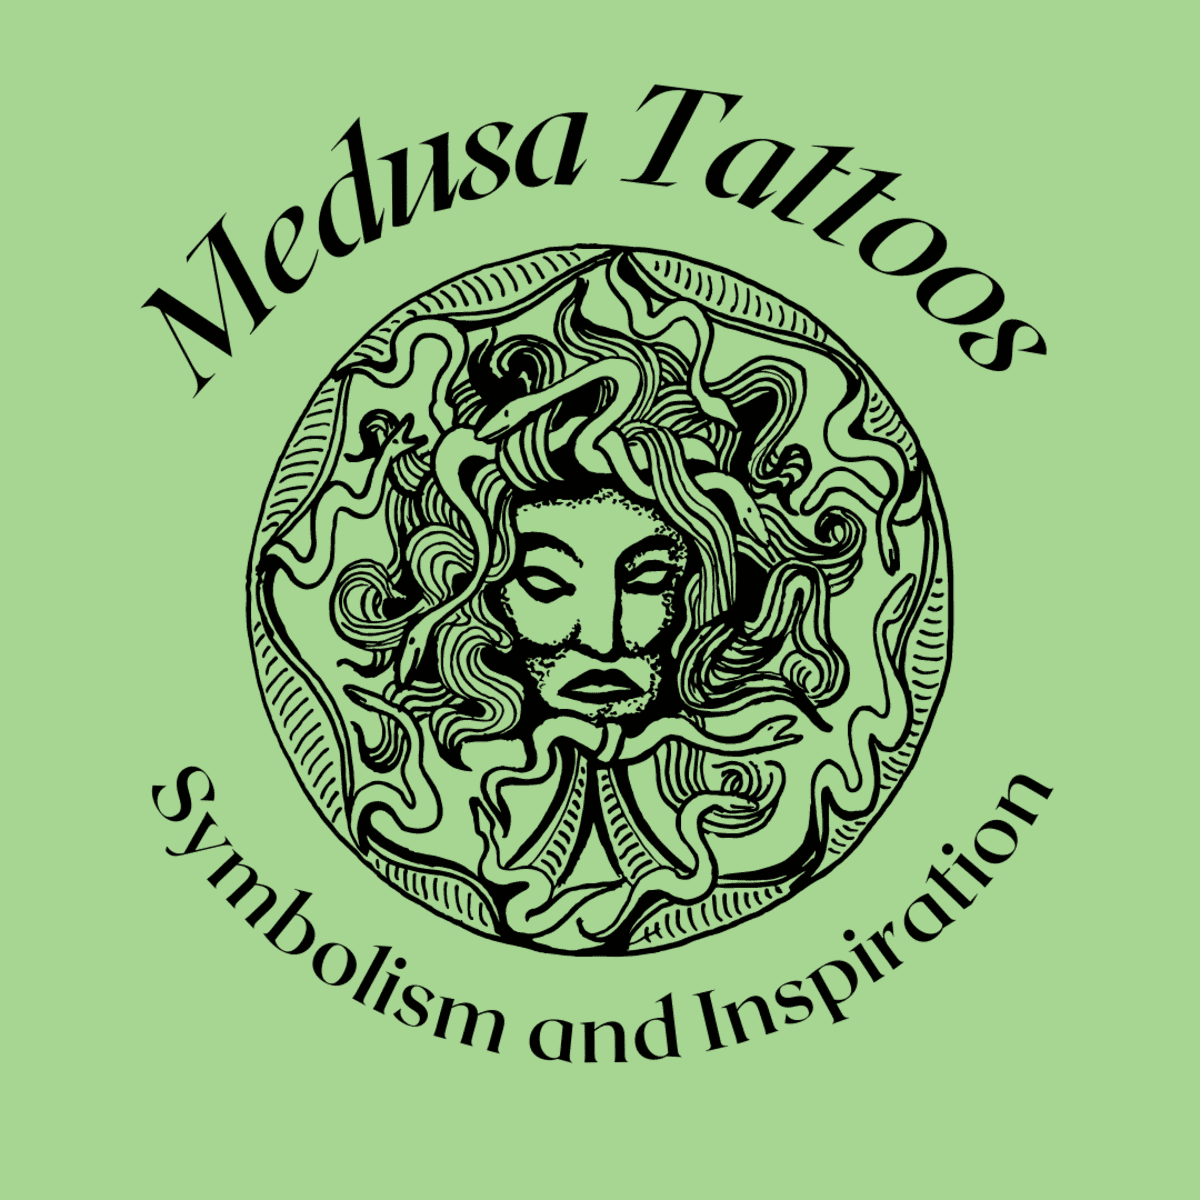 Ottoman art house - Medusa Tattoo desing #tattoo #tat #tattoos #tattoodesign  #tattooart #tattooartist #tattoomodel #dövme #art #instaart #instalike  #instagood #turkishink #newschooltattoo #oldschooltattoo #smalltattoo  #tattooink #tattoogirl ...